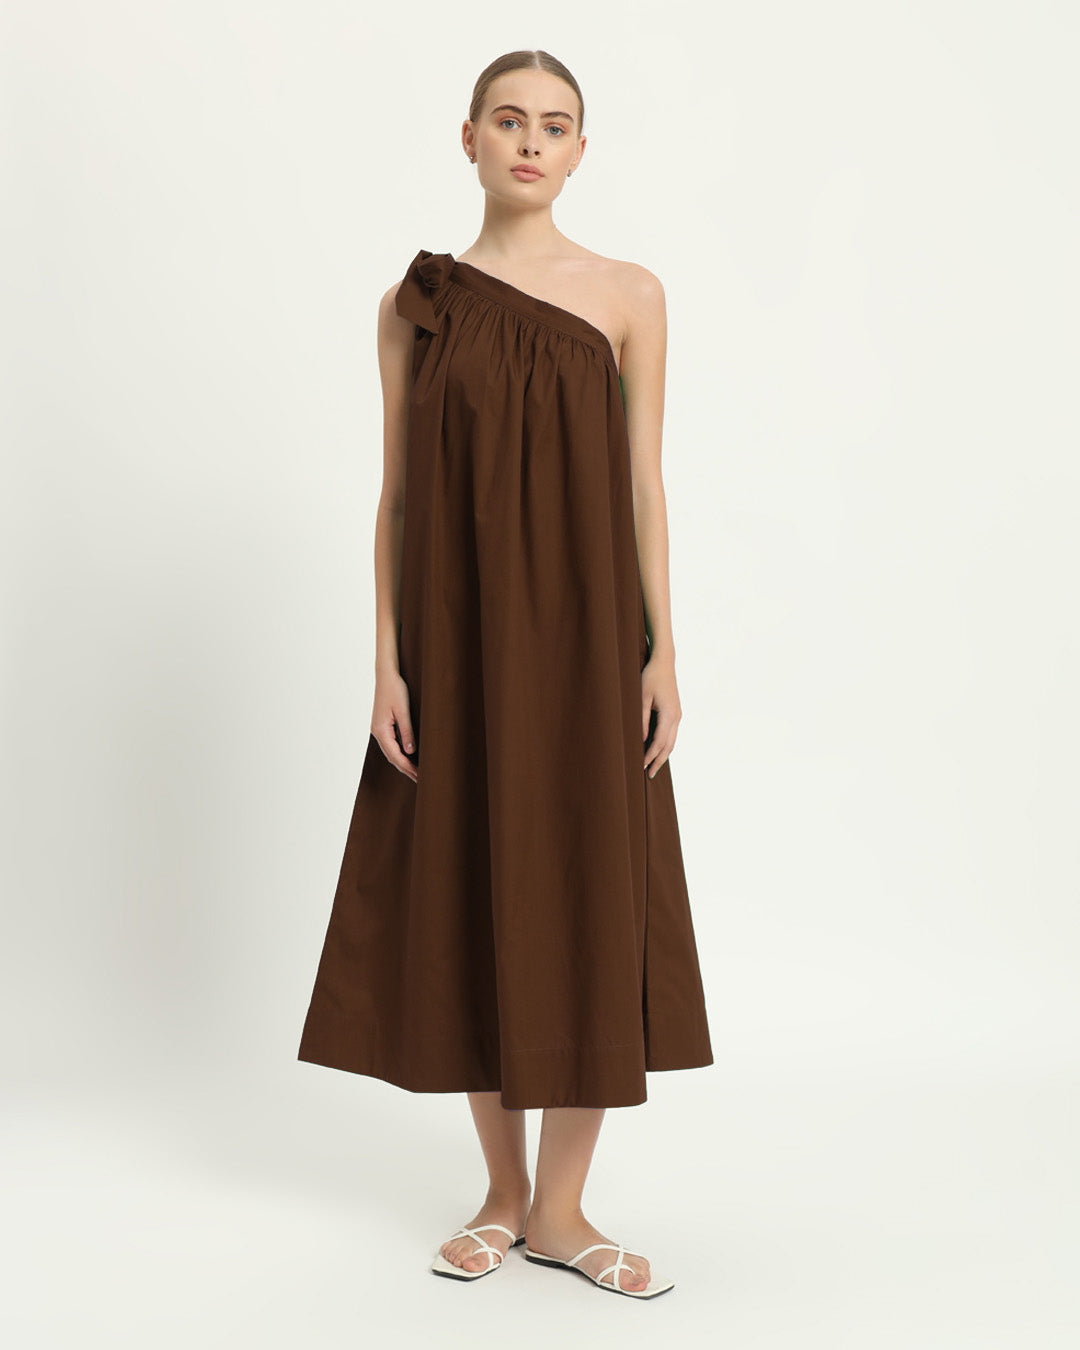 The Strehla Nutshell Cotton Dress